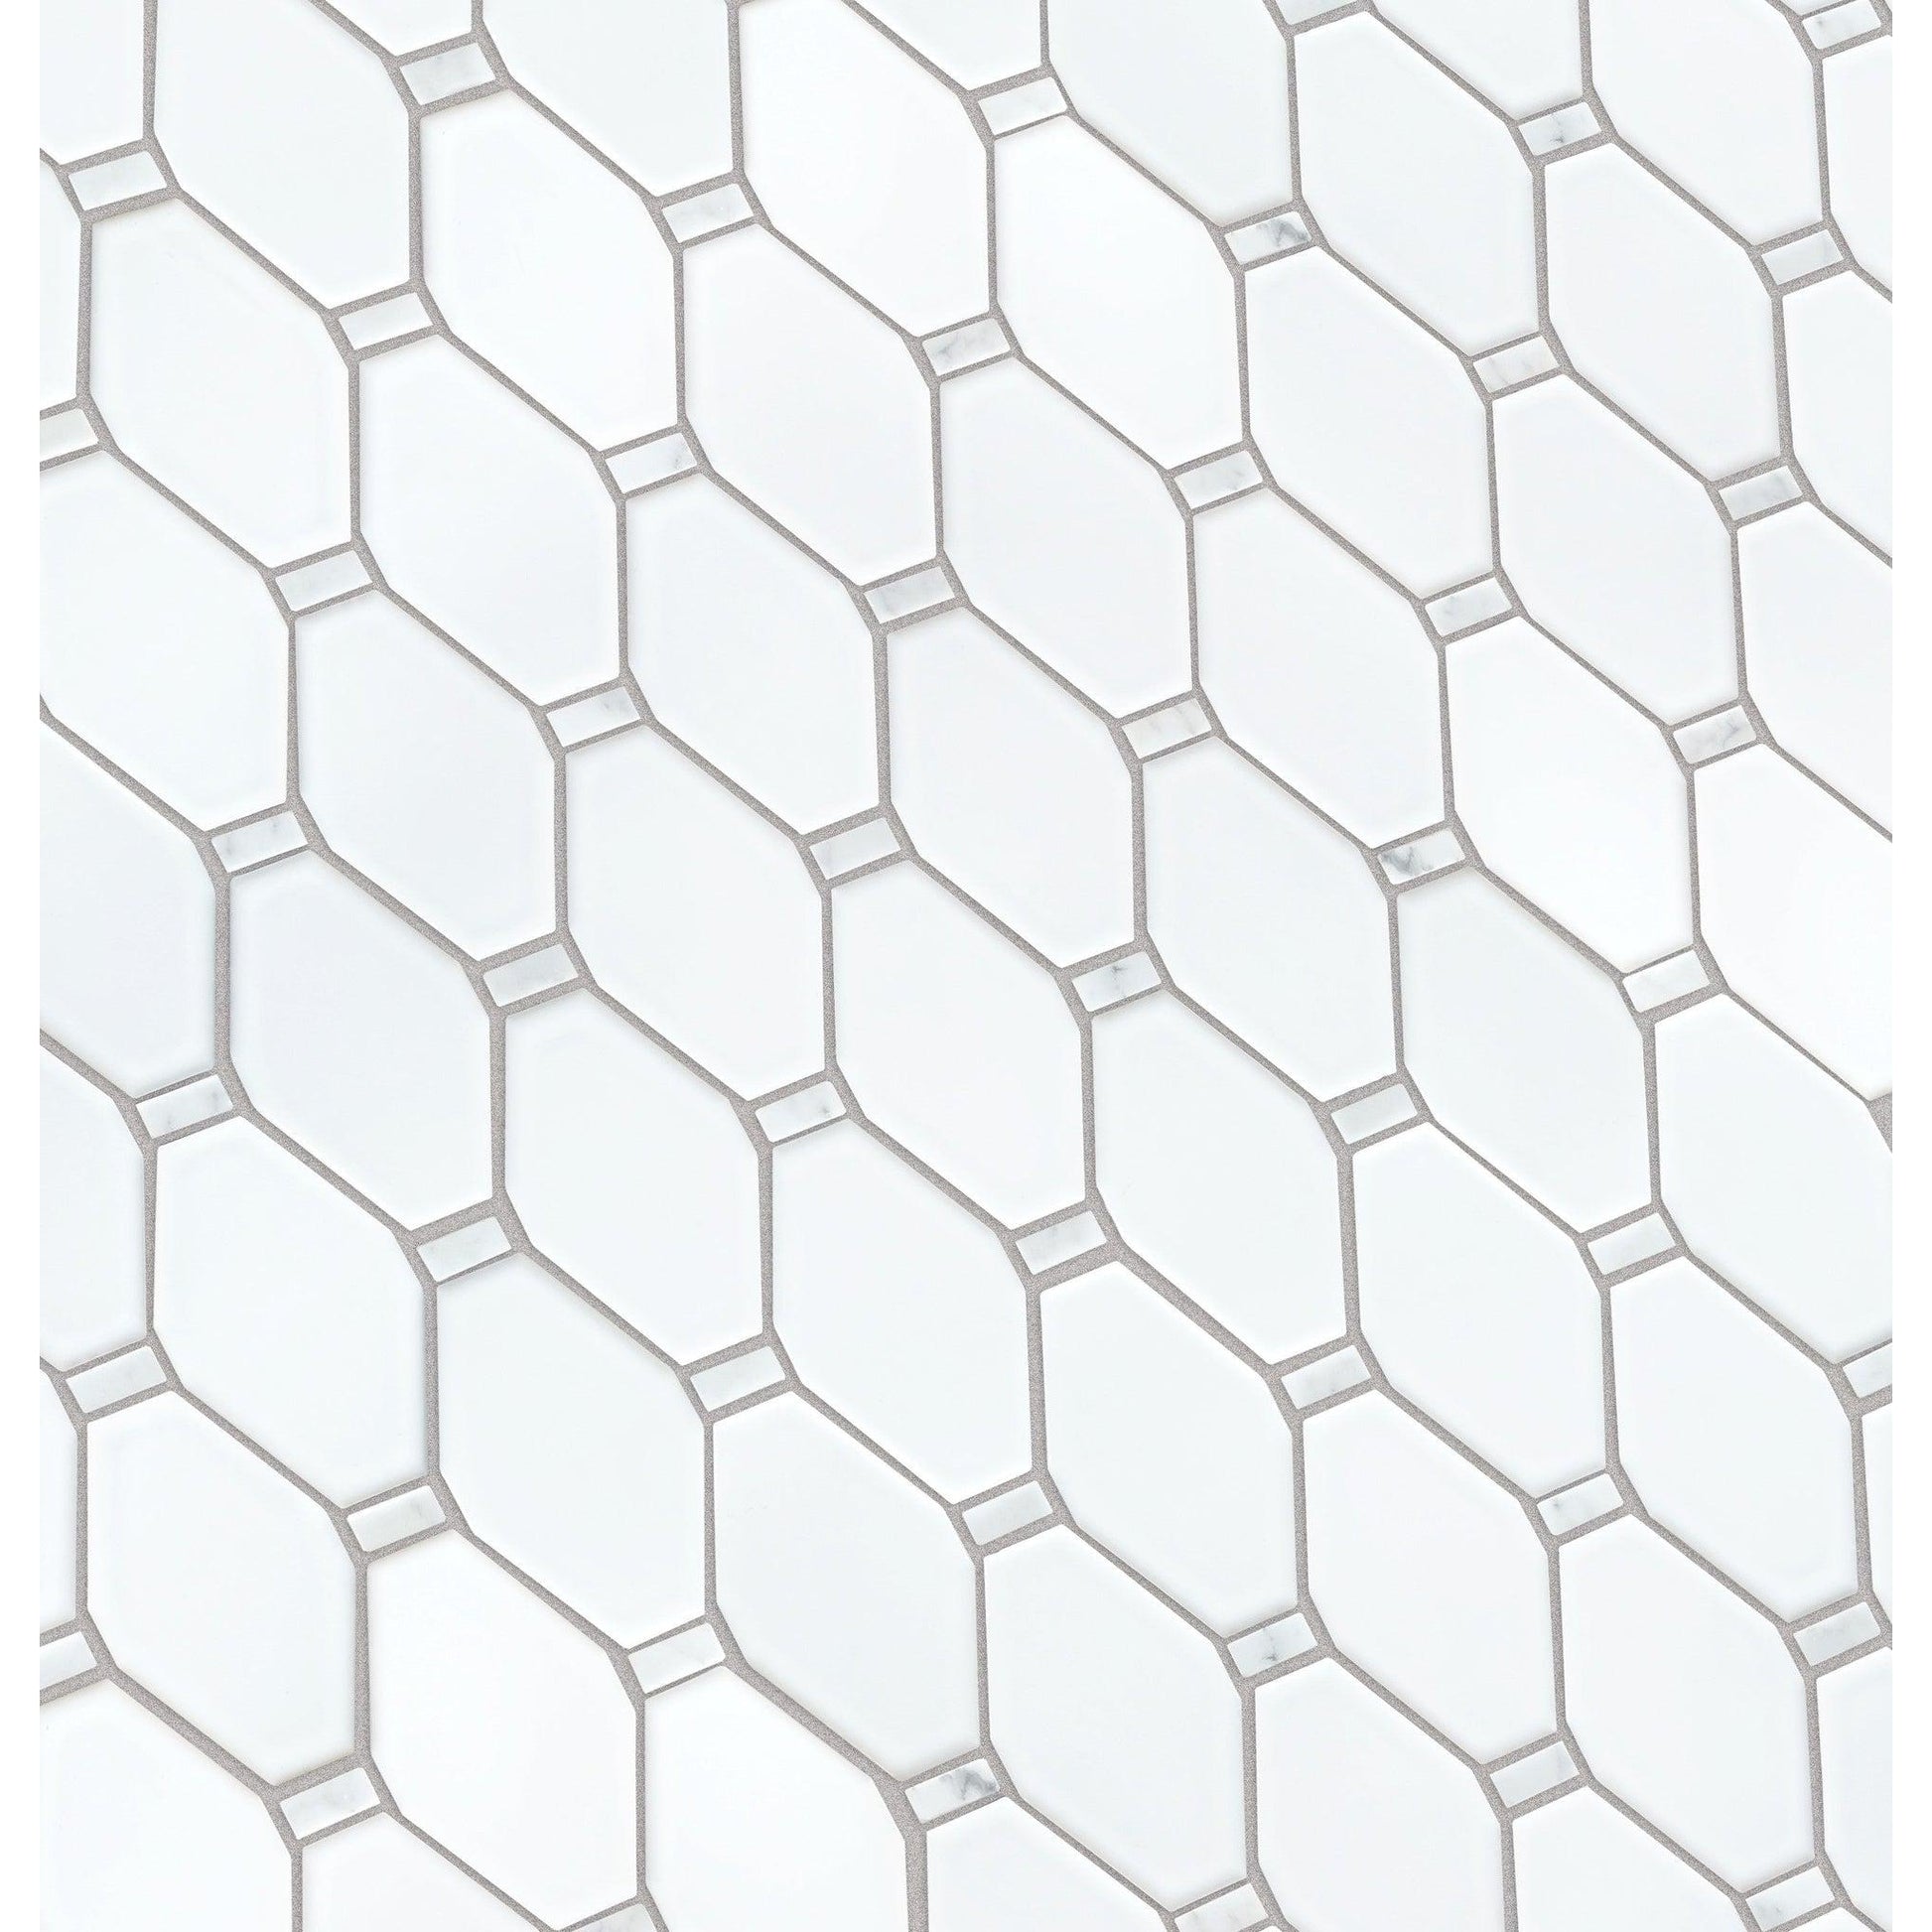 Altair Badajoz 11 pcs. Diamond White Glass Mosaic Floor and Wall Tile